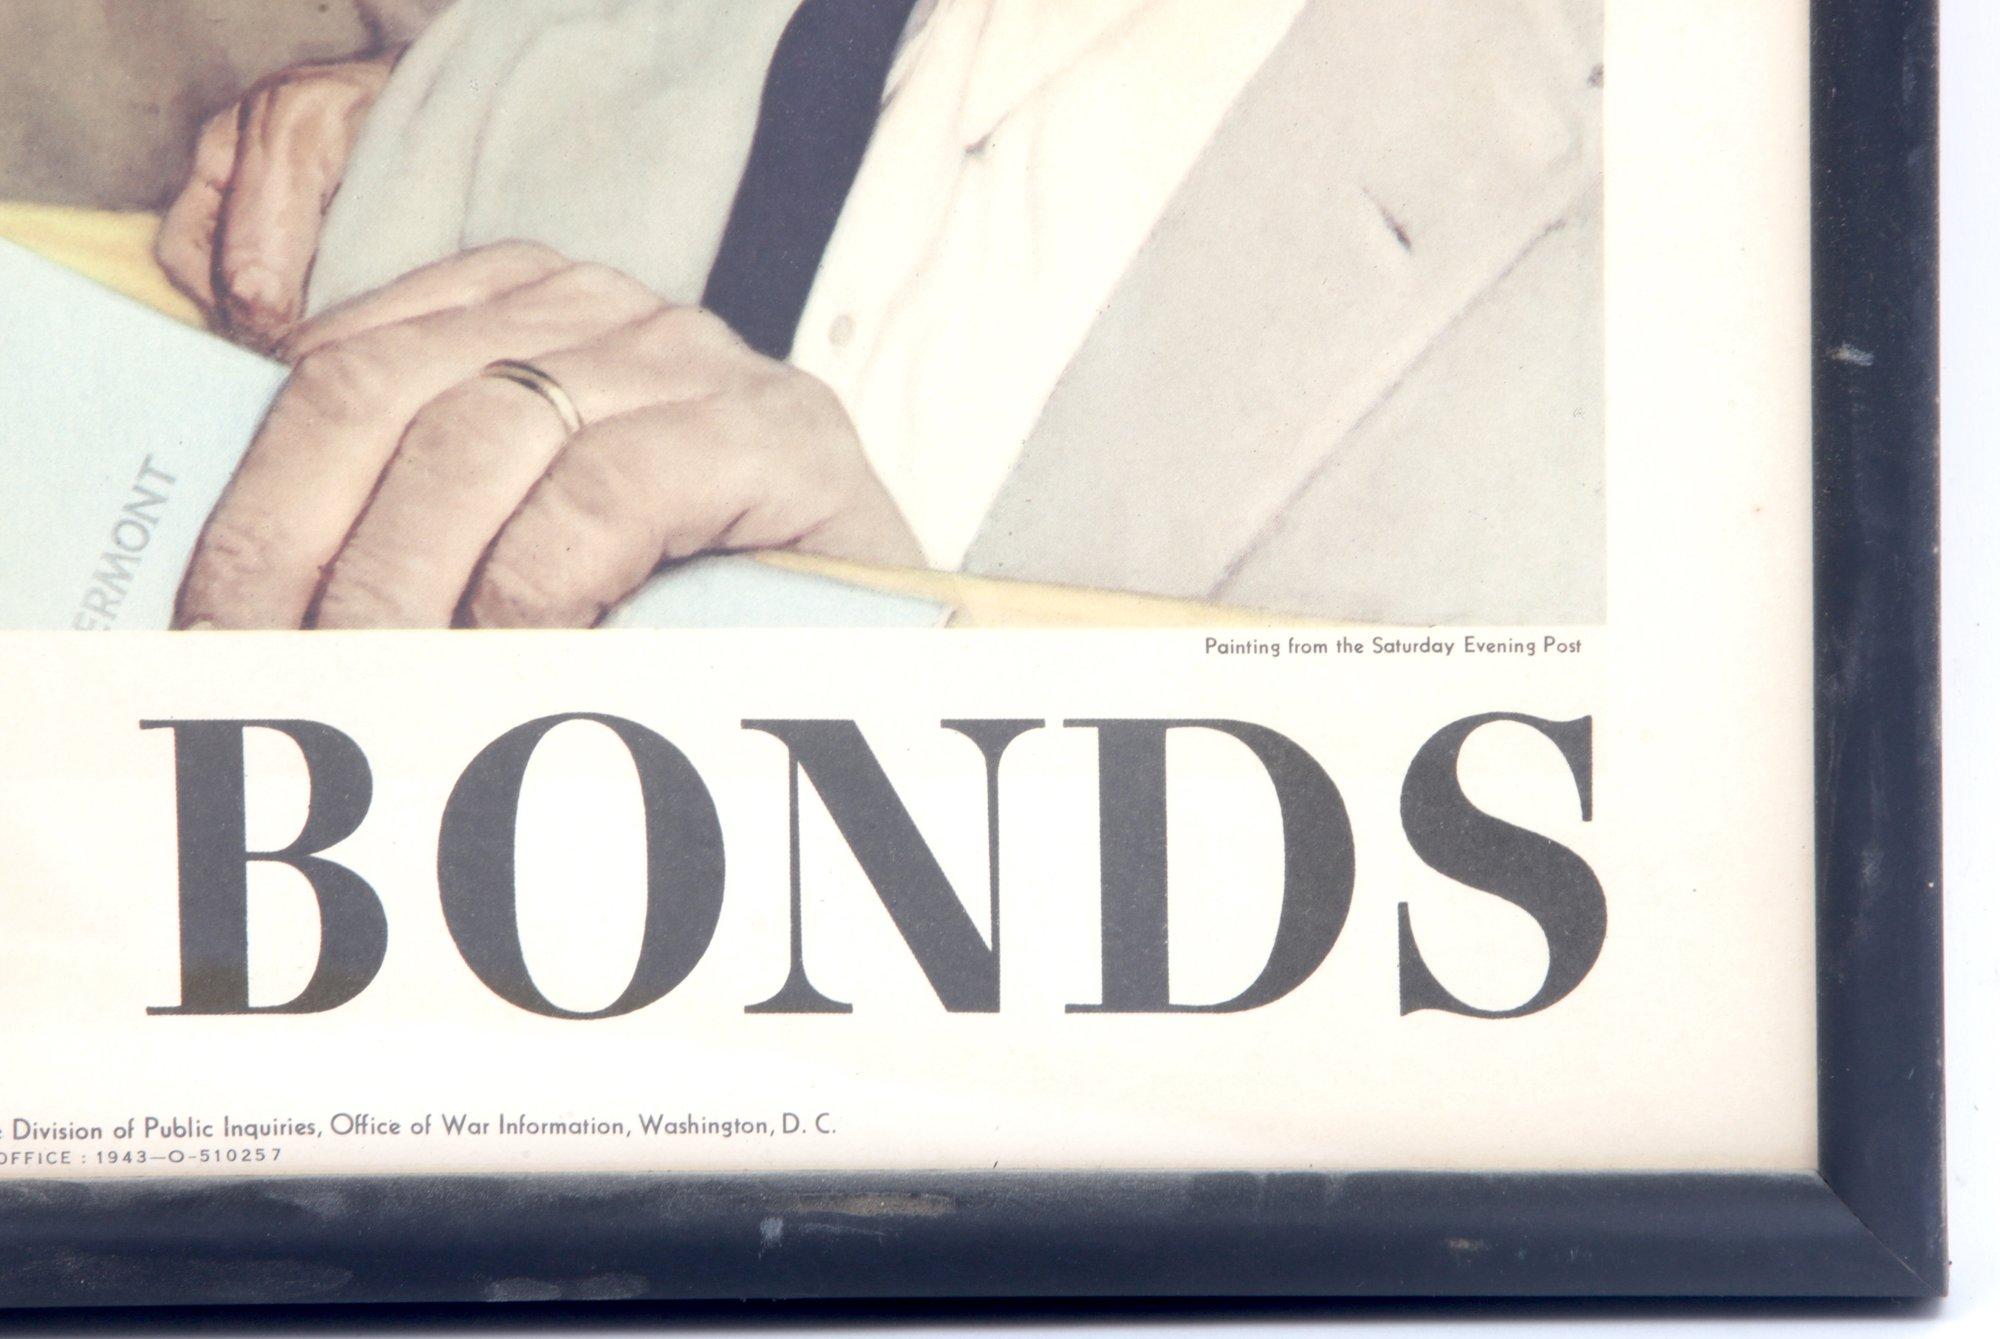 Buy War Bonds Framed Poster Save Freedom Of Speech Norman Rockwell